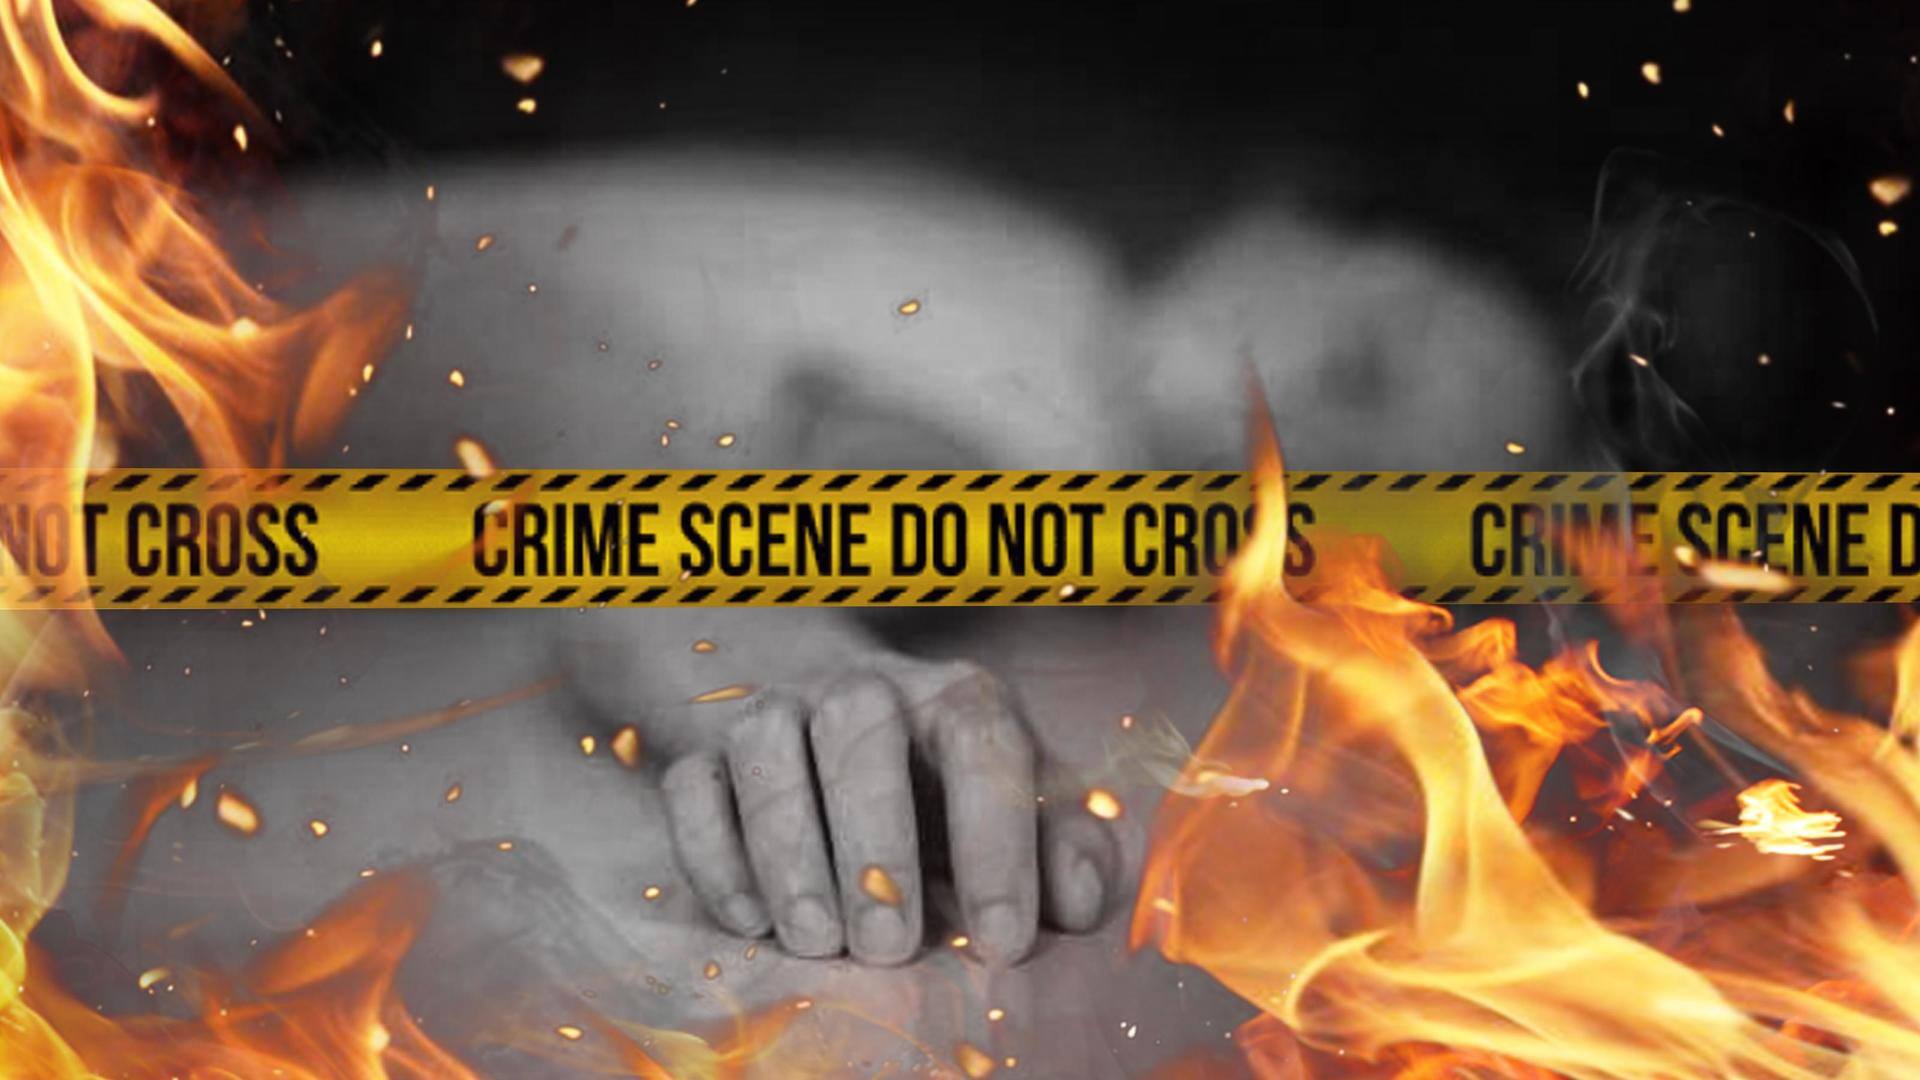 Another Delhi shocker: Woman set ablaze by live-in partner dies